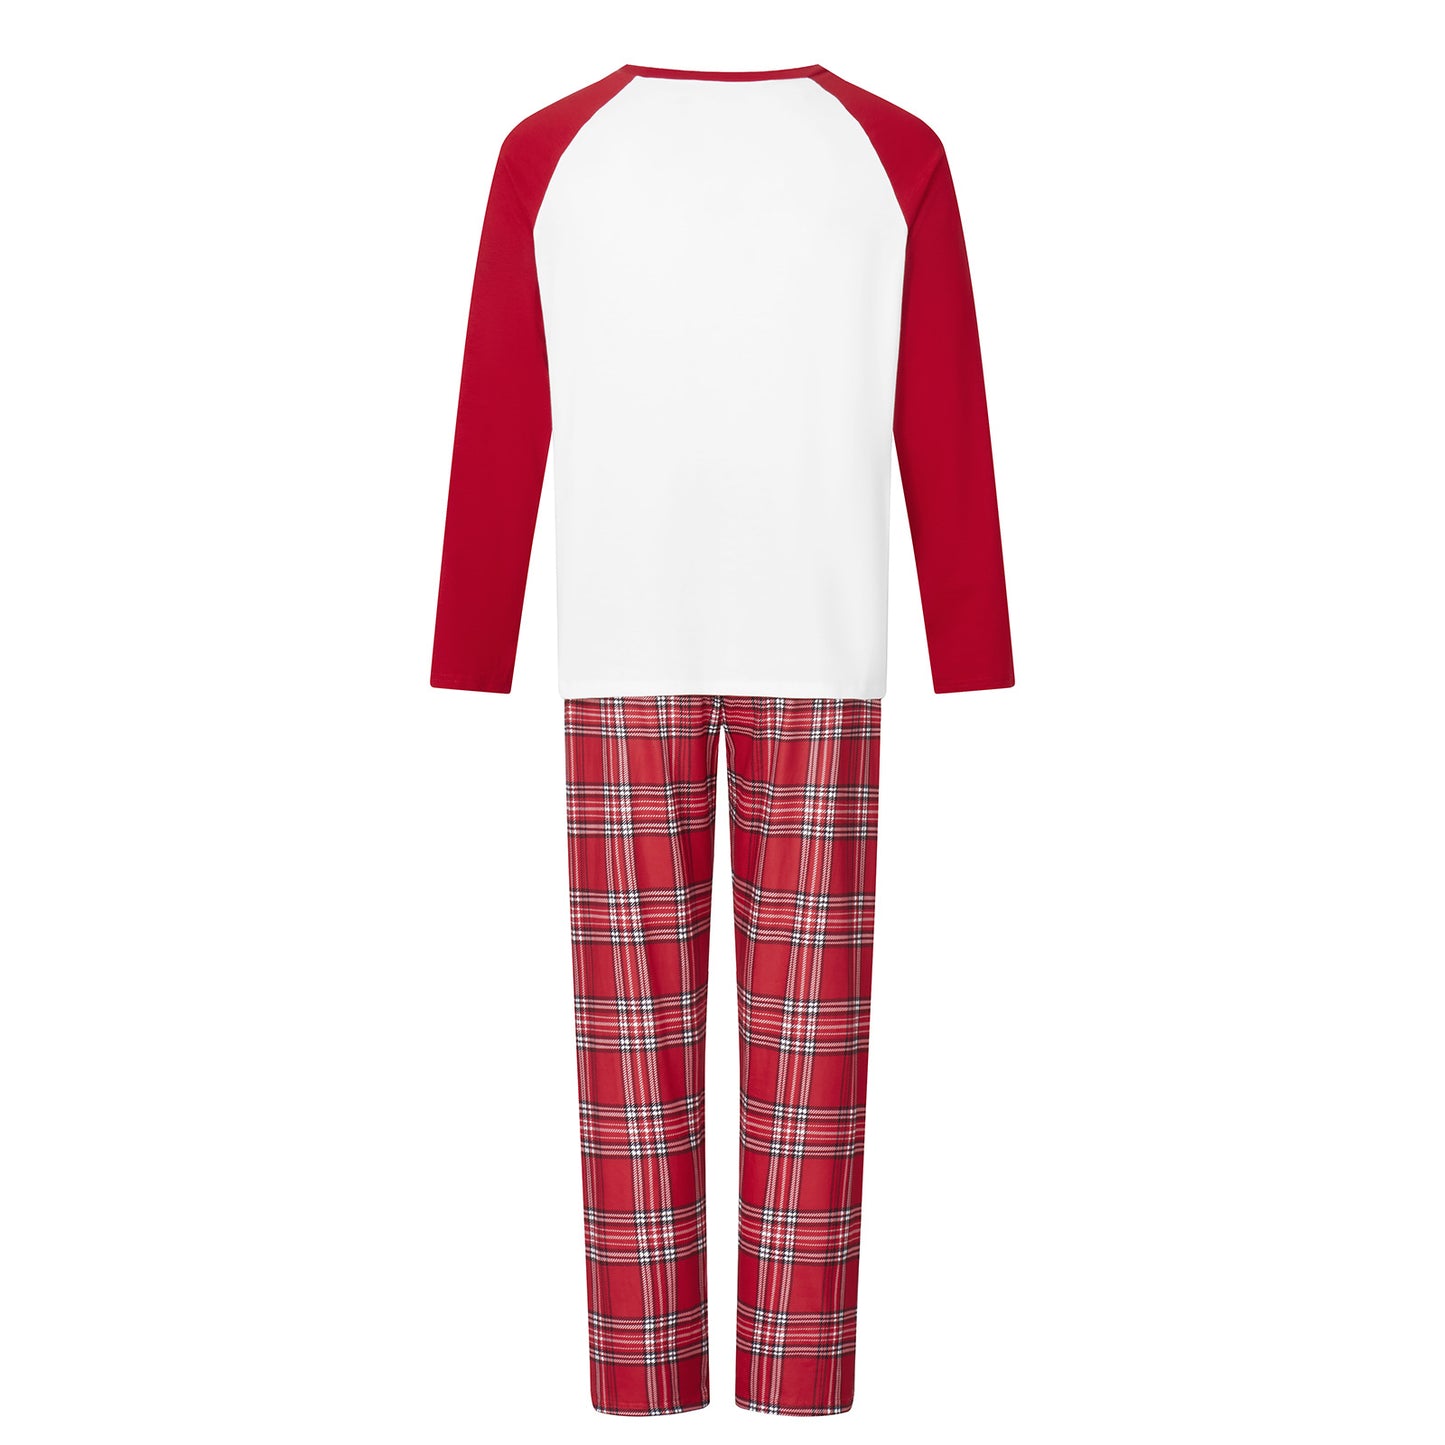 BamBam Christmas Family Wear Printed Loungewear Pajama Set - BamBam